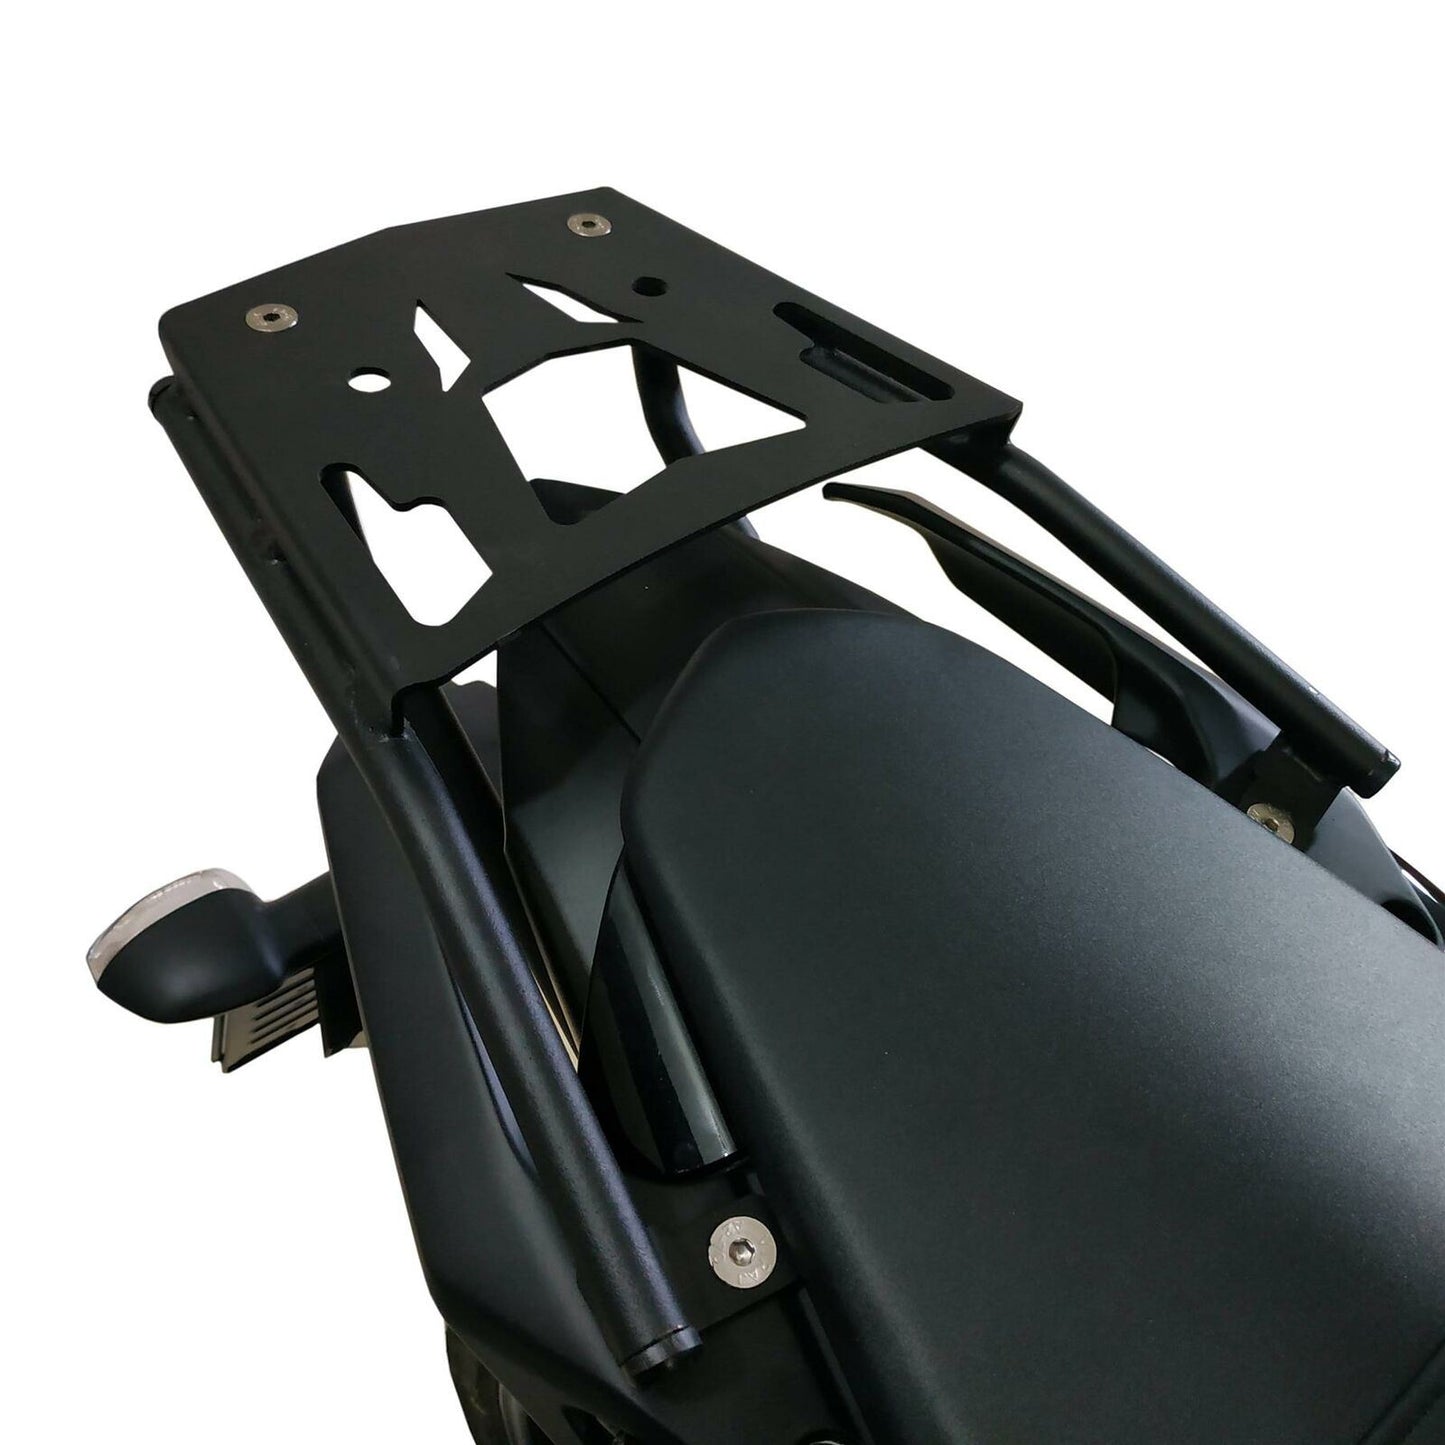 Yamaha MT03 MT25 rear rack luggage carrier 2016-19